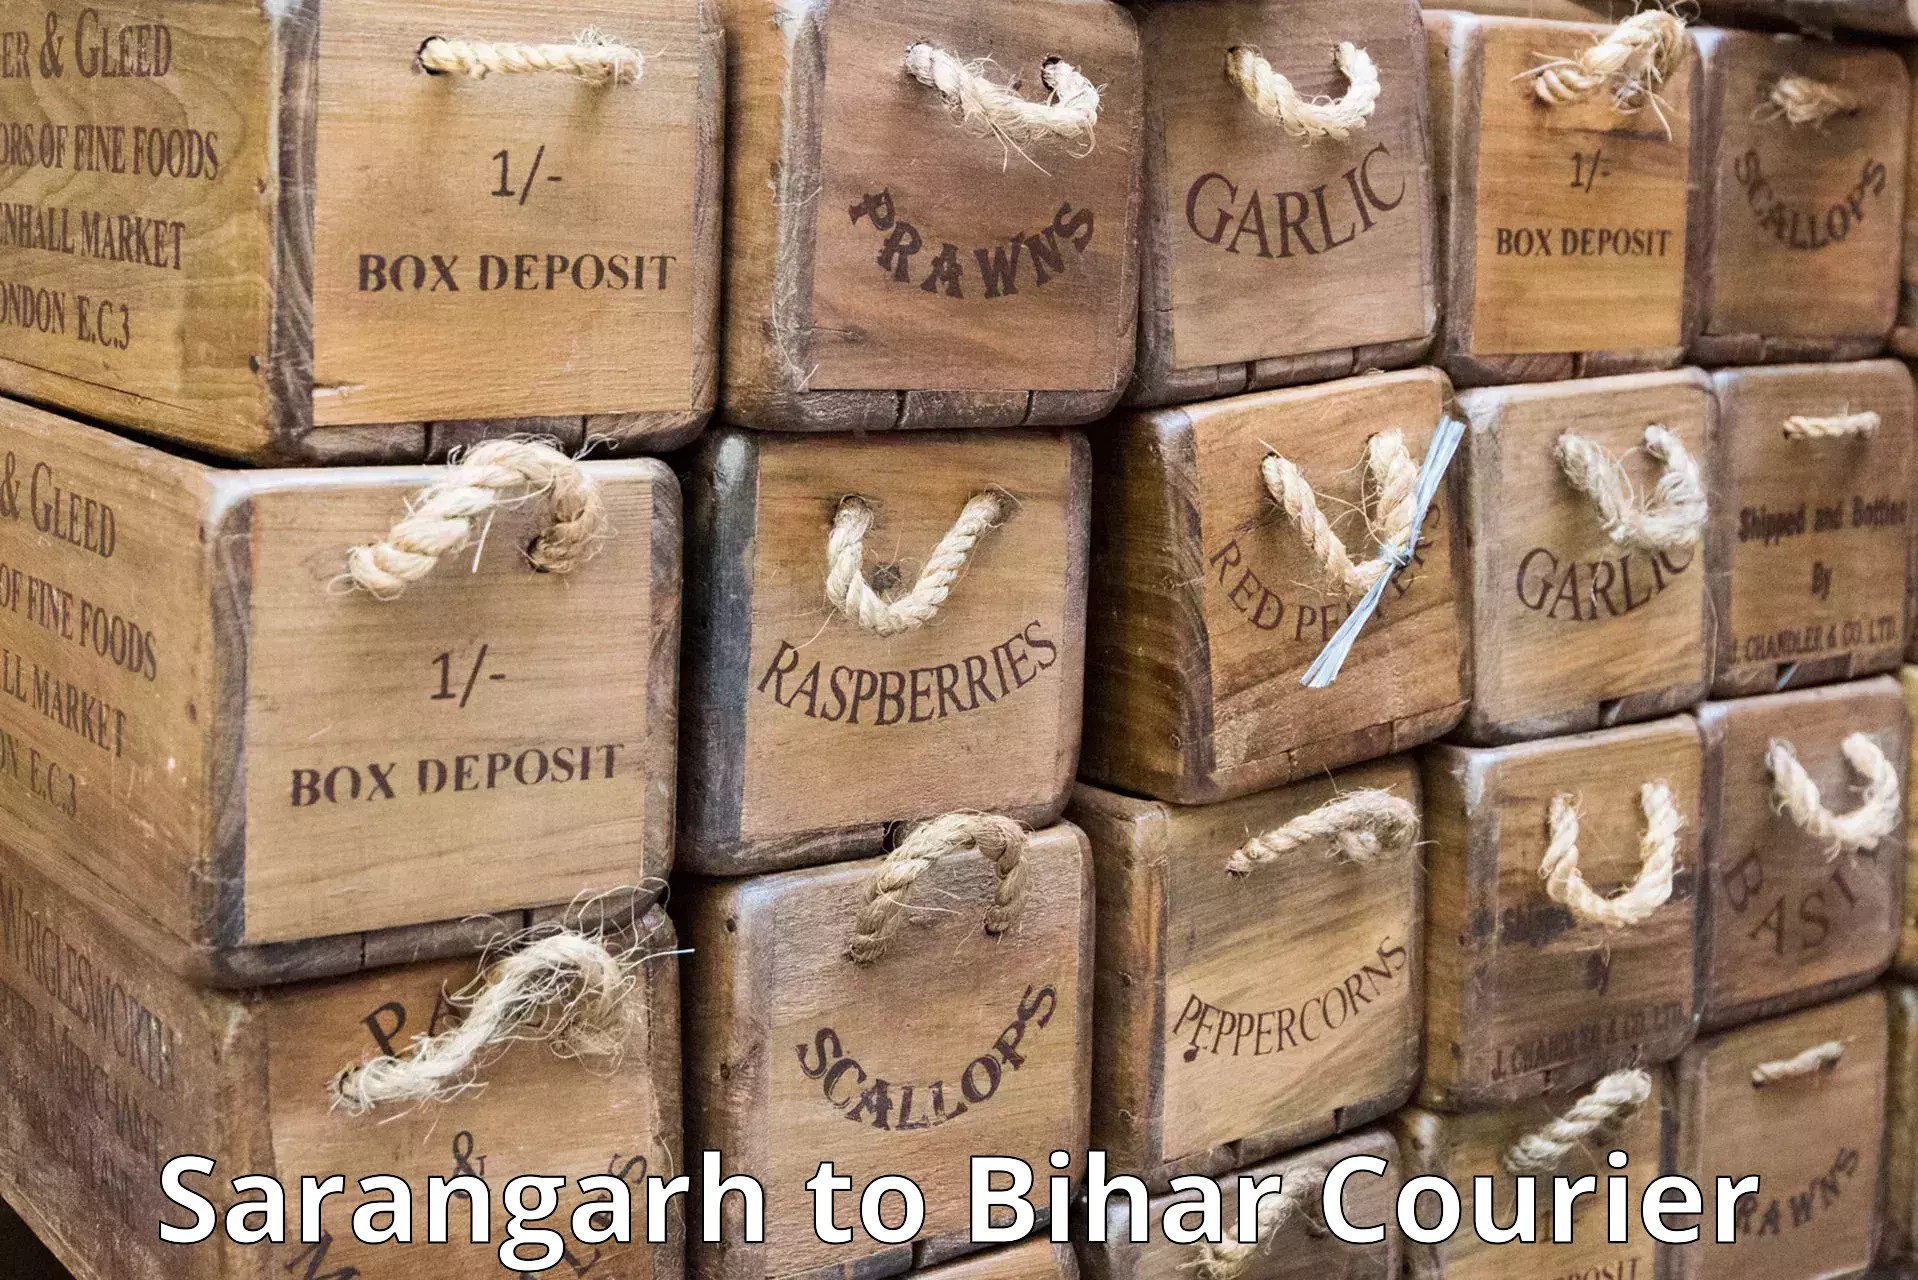 International parcel service Sarangarh to Bihar